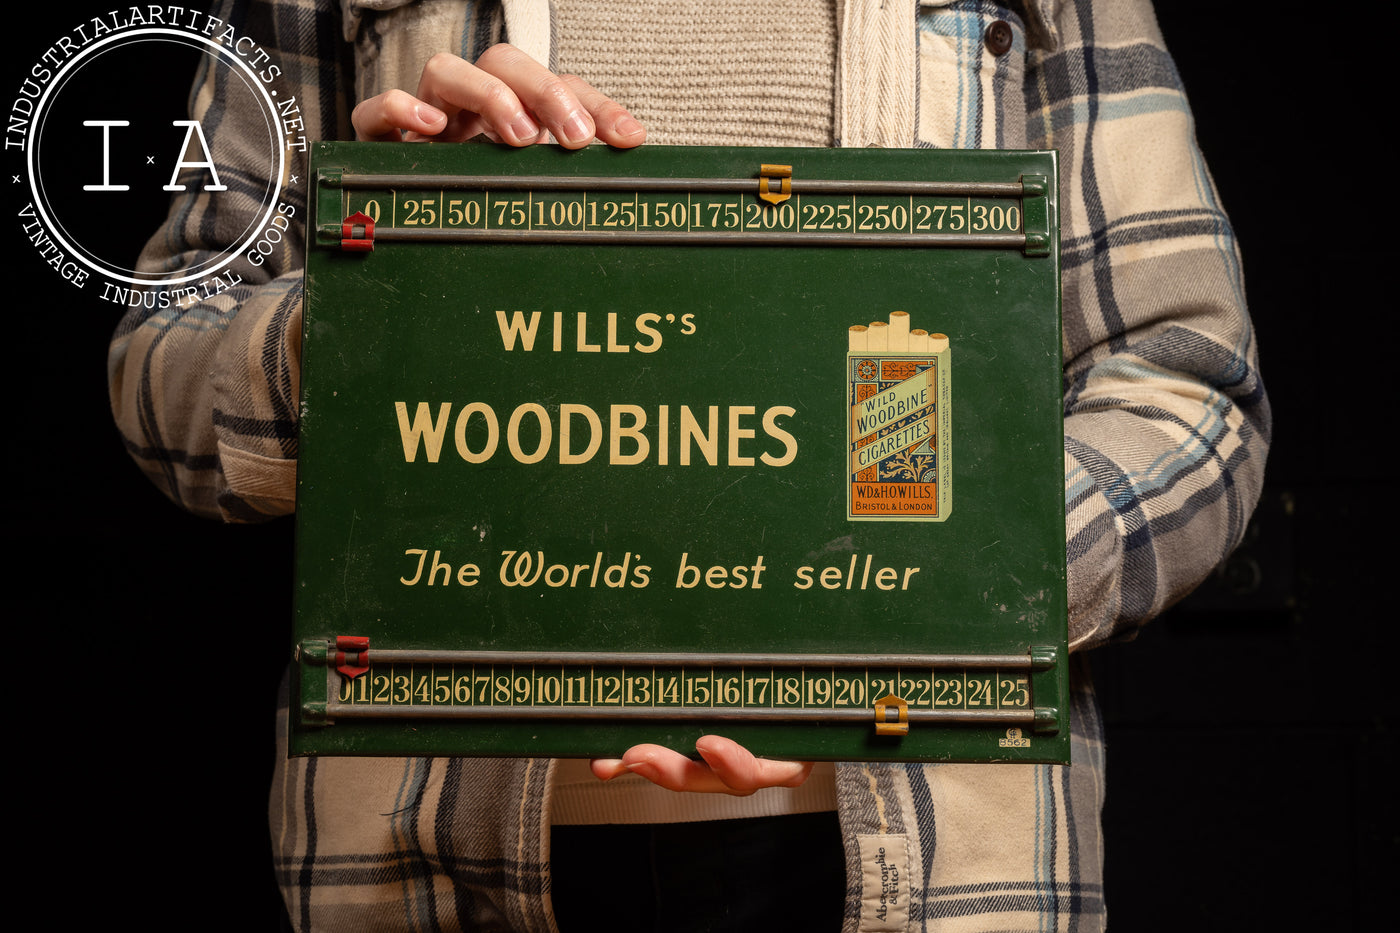 Wills's Woodbine Cricket Game Scoreboard